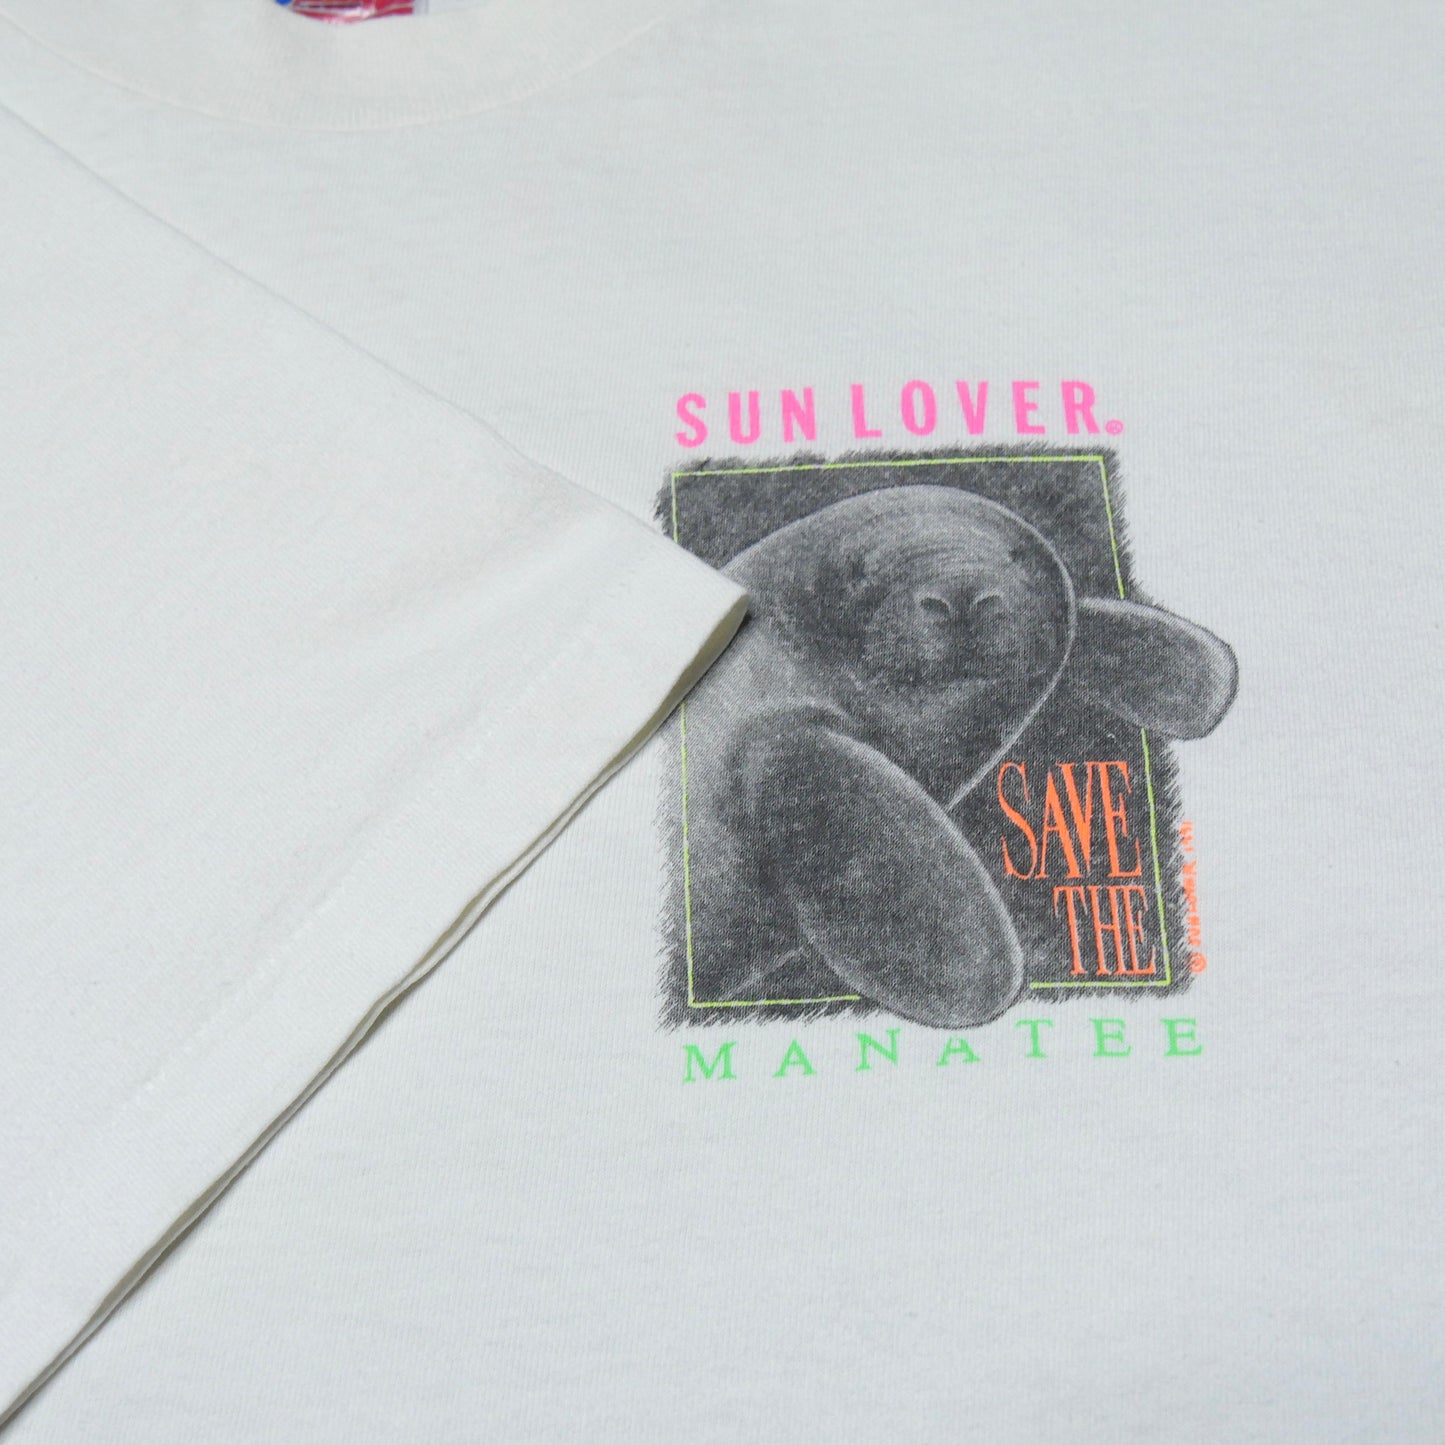 Save the Manatee Sunlover Shirt - Large